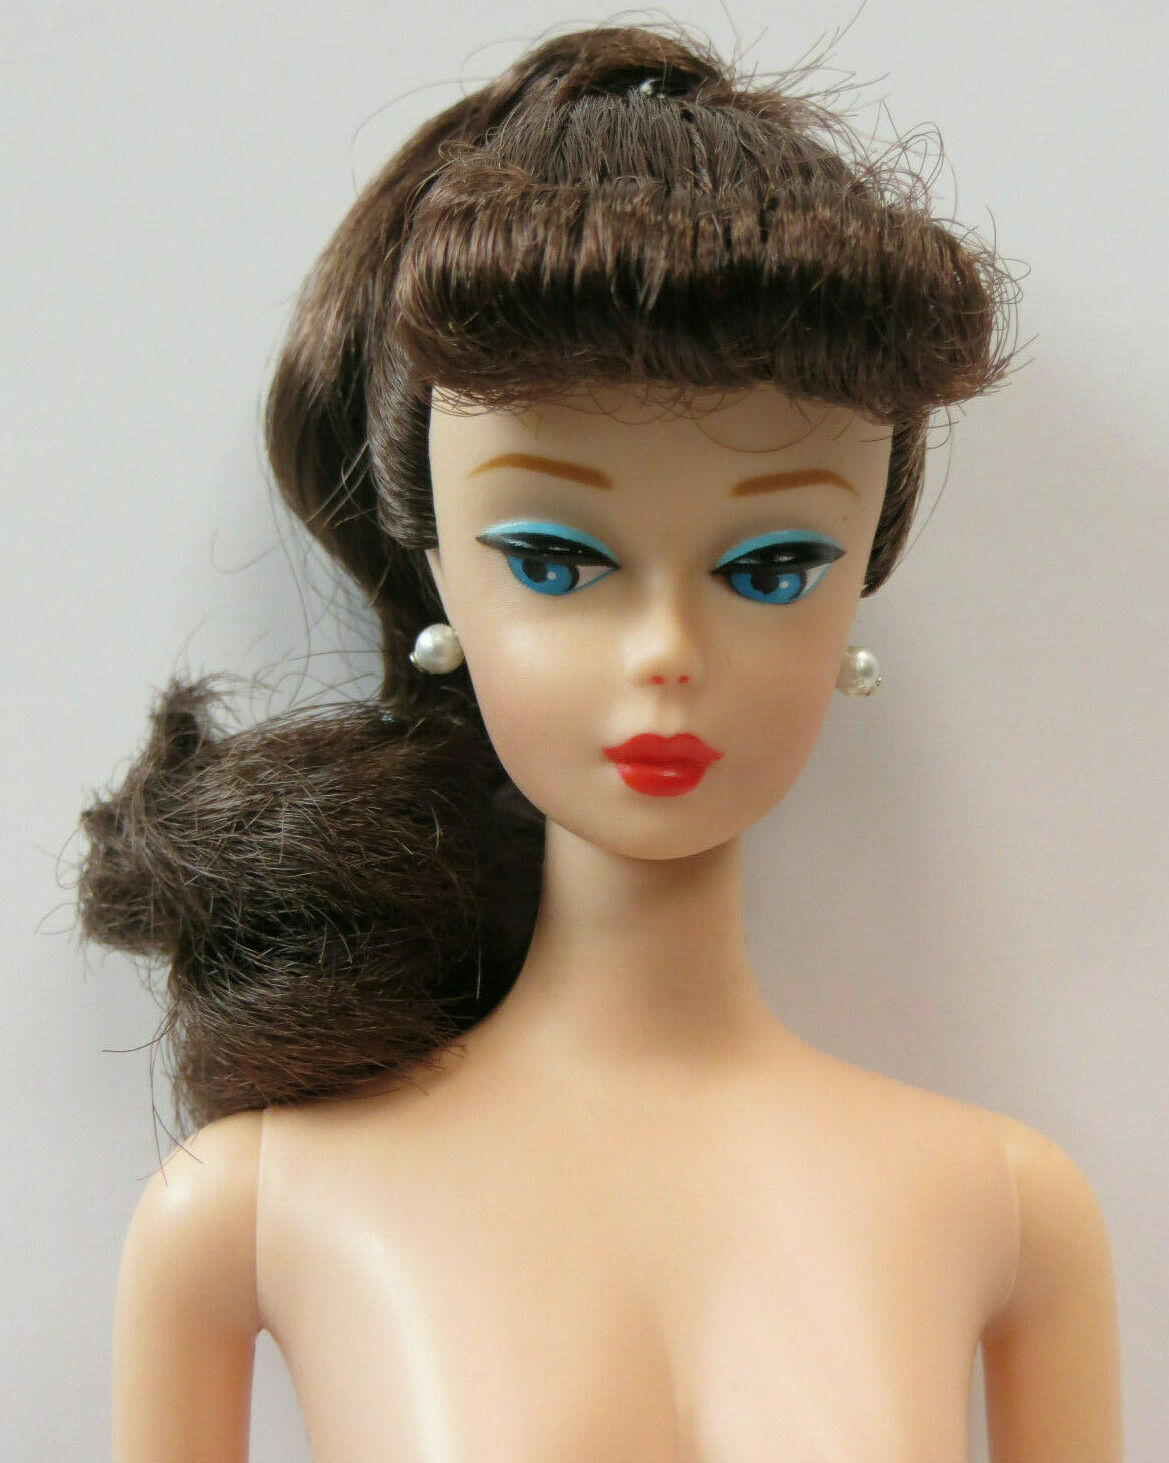 1959 Reproduction Brunette Ponytail Barbie Doll Deboxed Solo in Spotlight 4 Ooak - $23.00